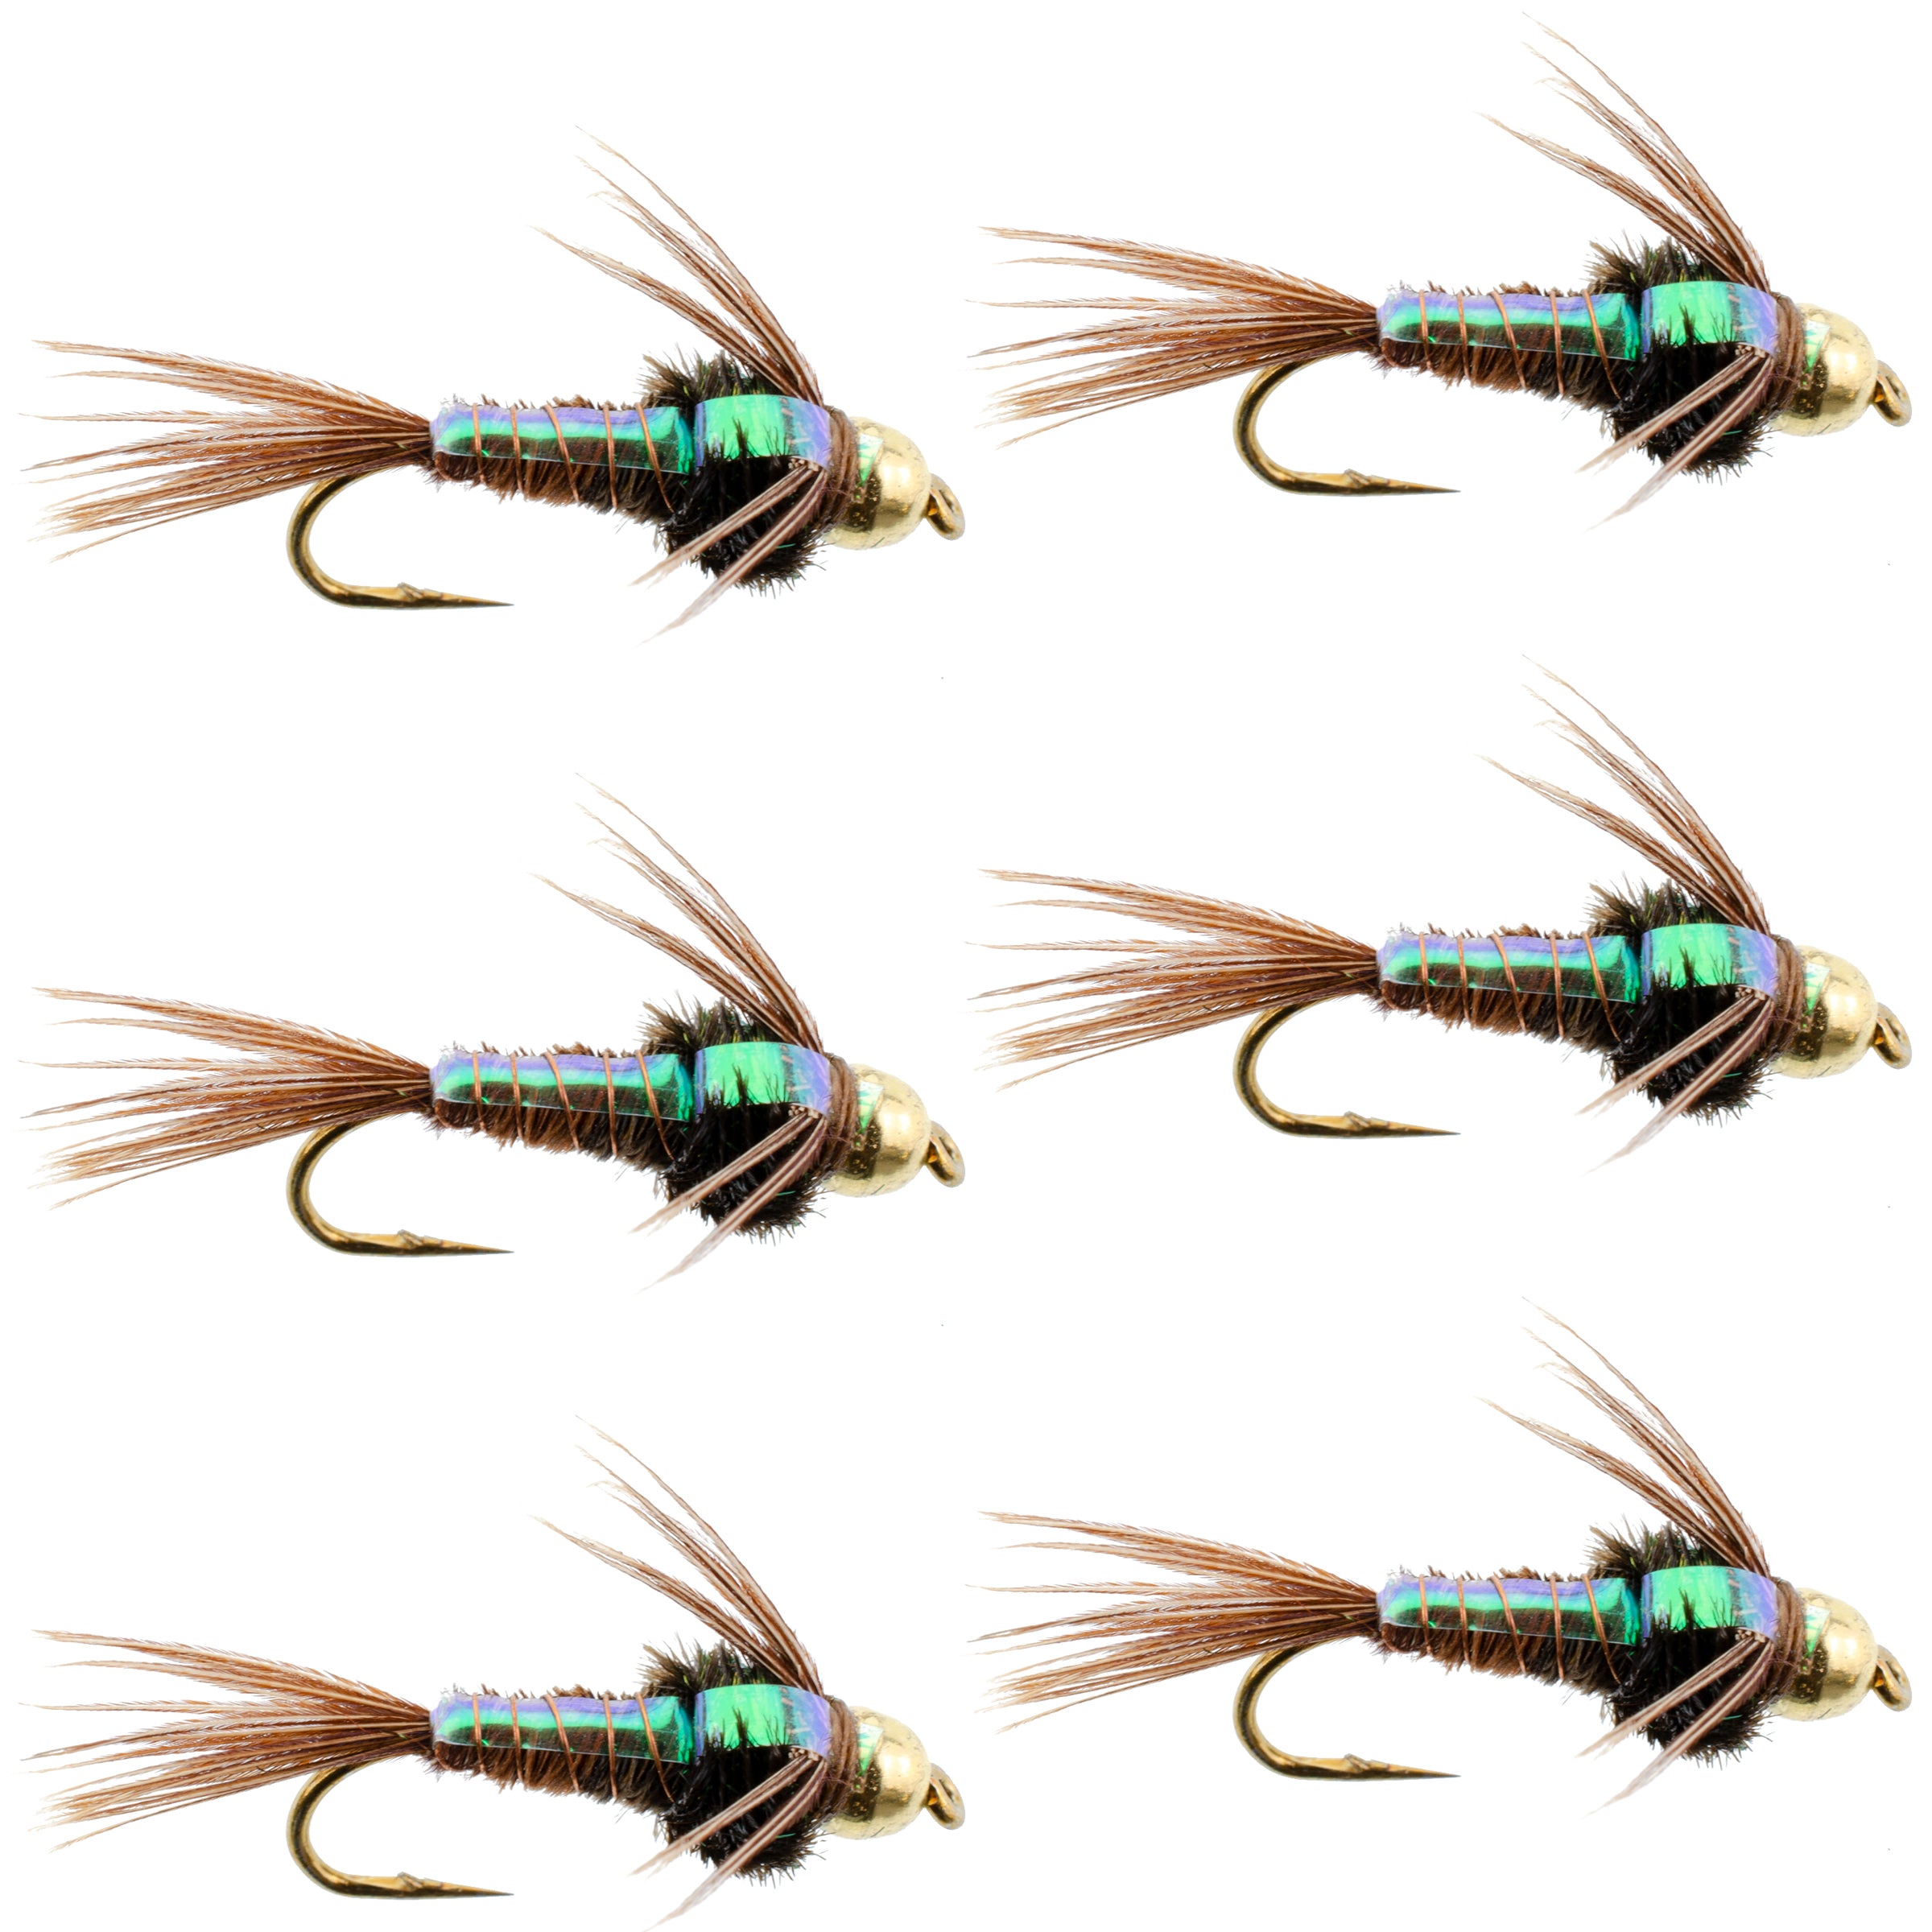 Bead Head Flash Back Pheasant Tail Nymph Fly Fishing Flies - 6 Flies Hook Size 12